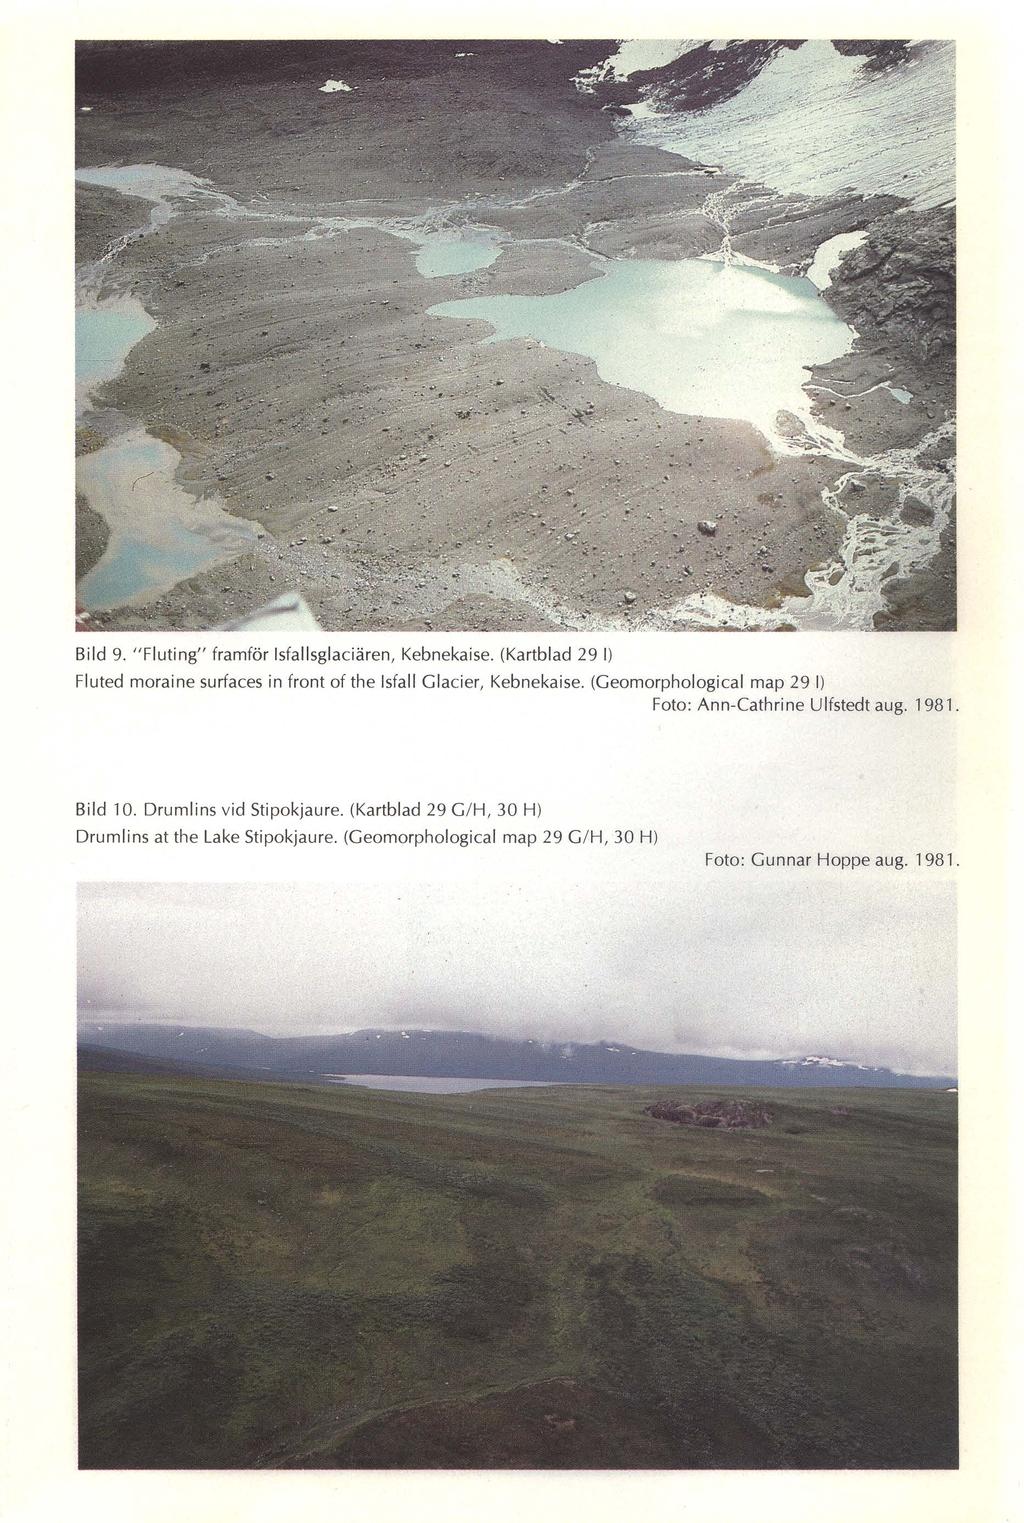 91-38-08003-6: Sidorna 62 till 91. Bild 9. "Fluting" framför Isfallsglaciären, Kebnekaise. (Kartblad 29 I) Fluted moraine surfaces in front of the Isfall Glacier, Kebnekaise.